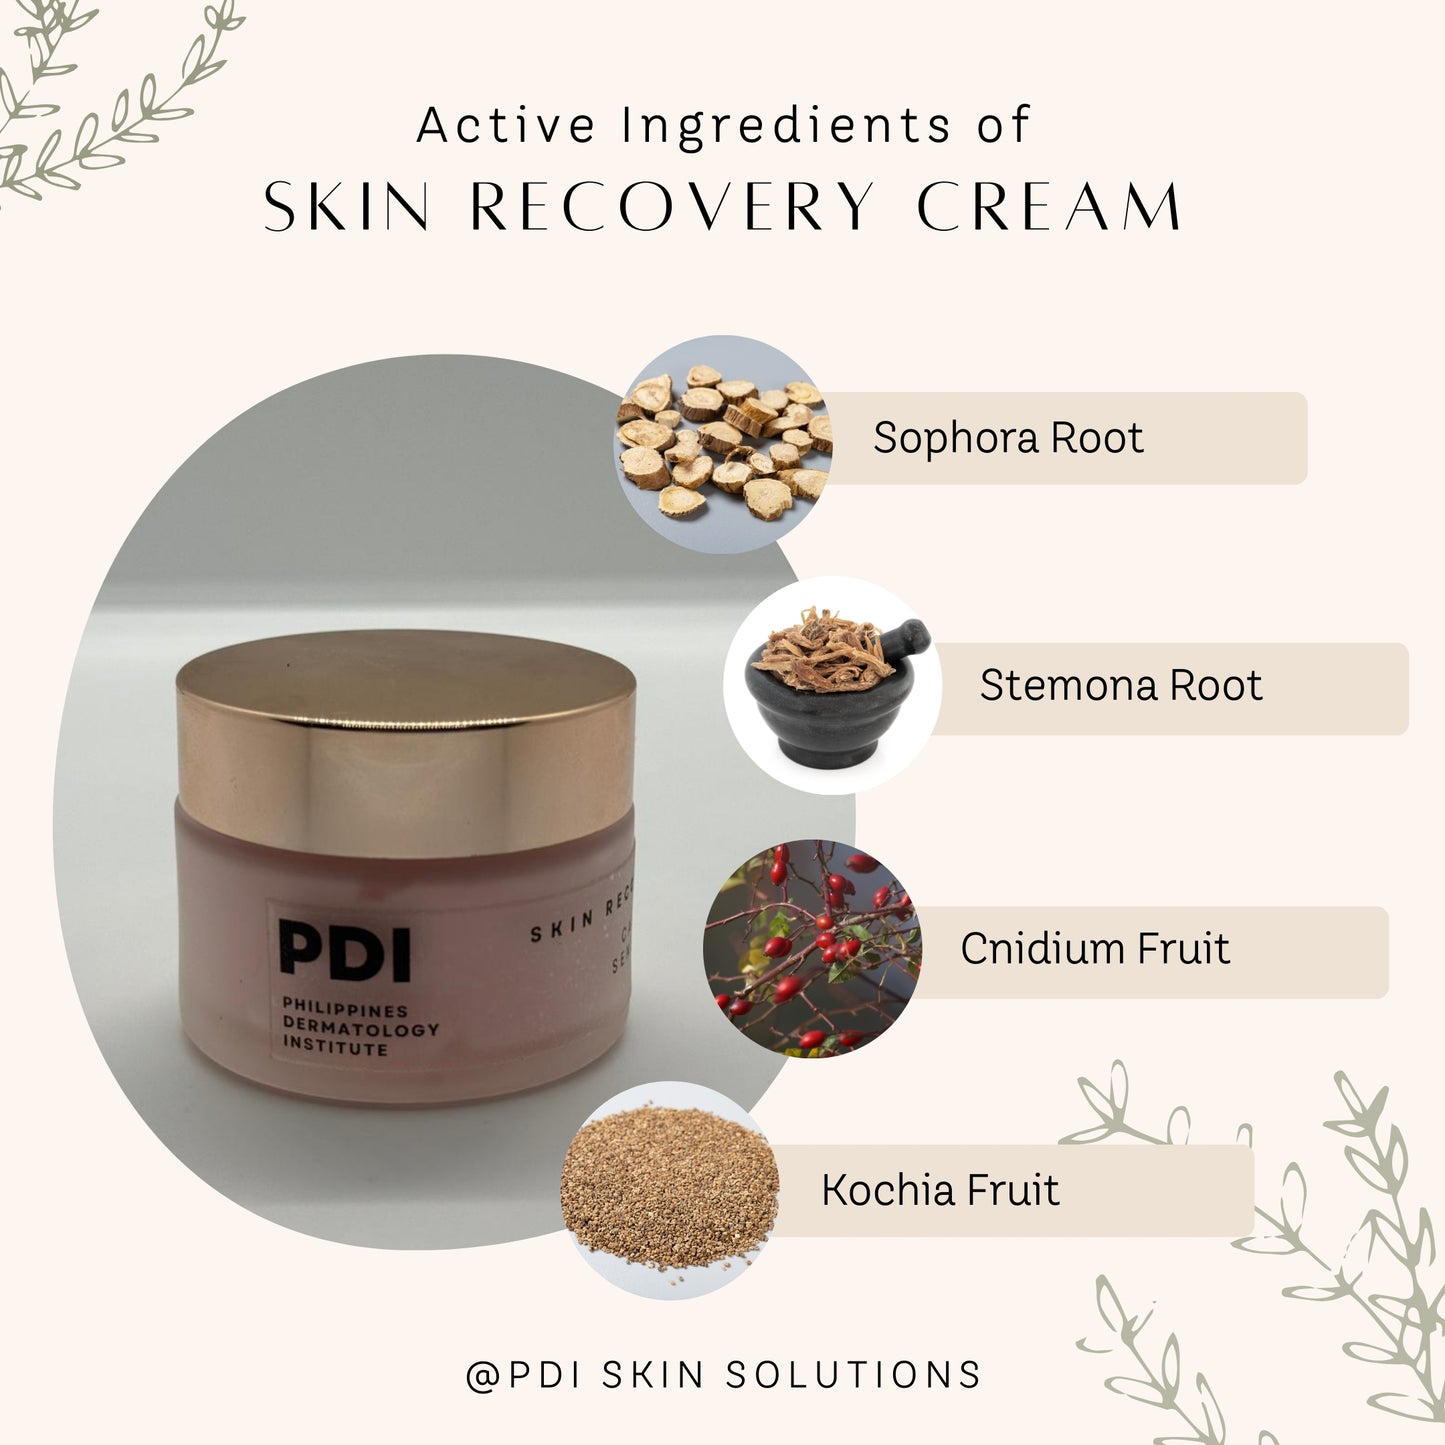 Skin Recovery Herbal Cream